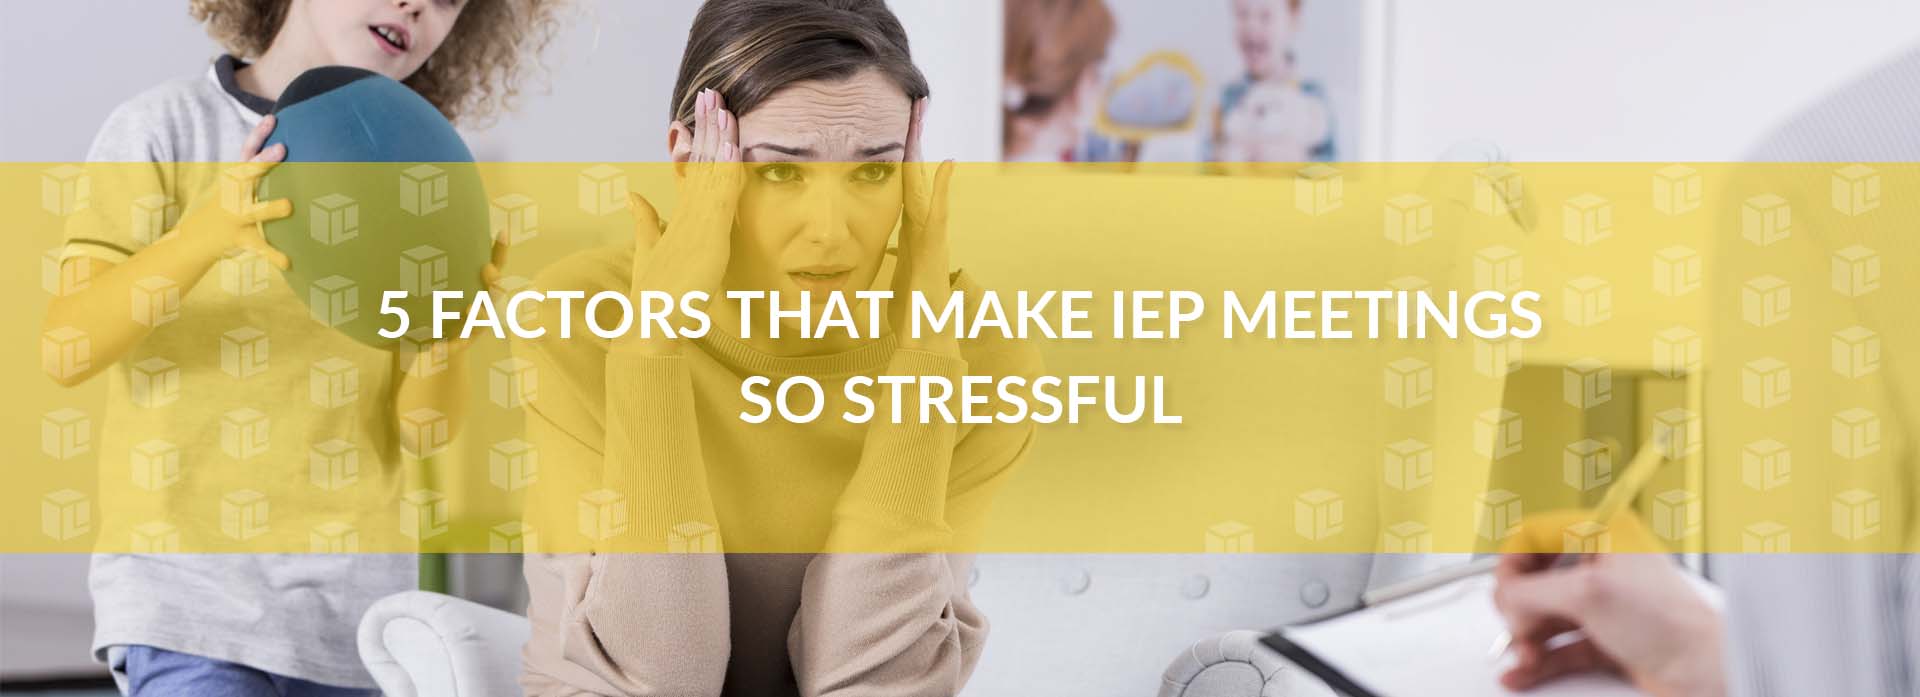 5 Factors That Make IEP Meetings So Stressful